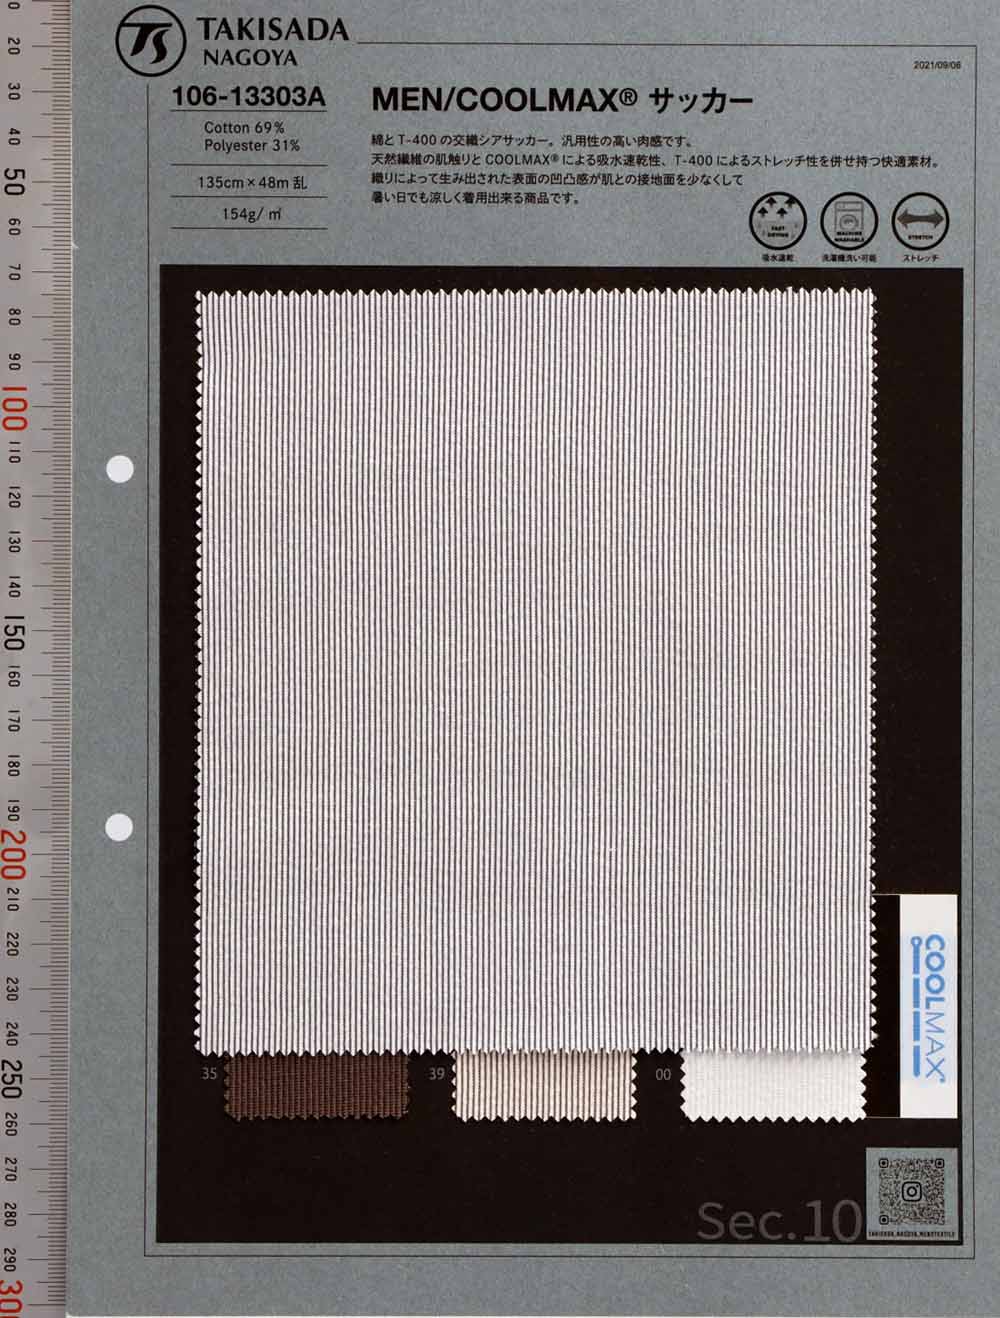 106-13303A HOMEM / COOLMAX® Cordlane Seersucker[Têxtil / Tecido] Takisada Nagoya